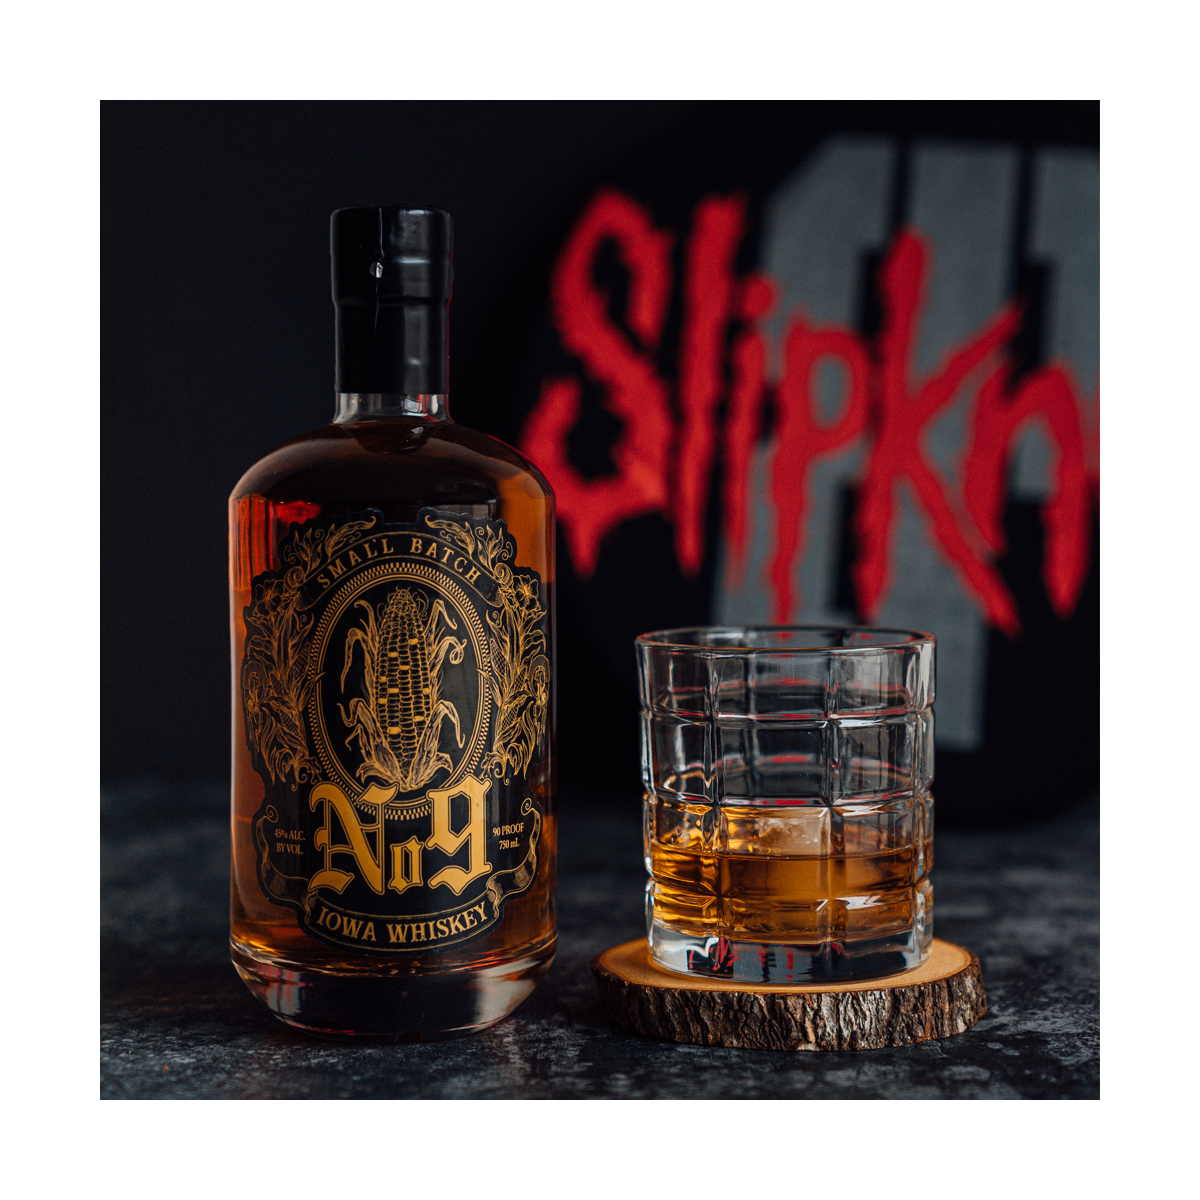 Slipknot No. 9 Small Batch Iowa Whiskey